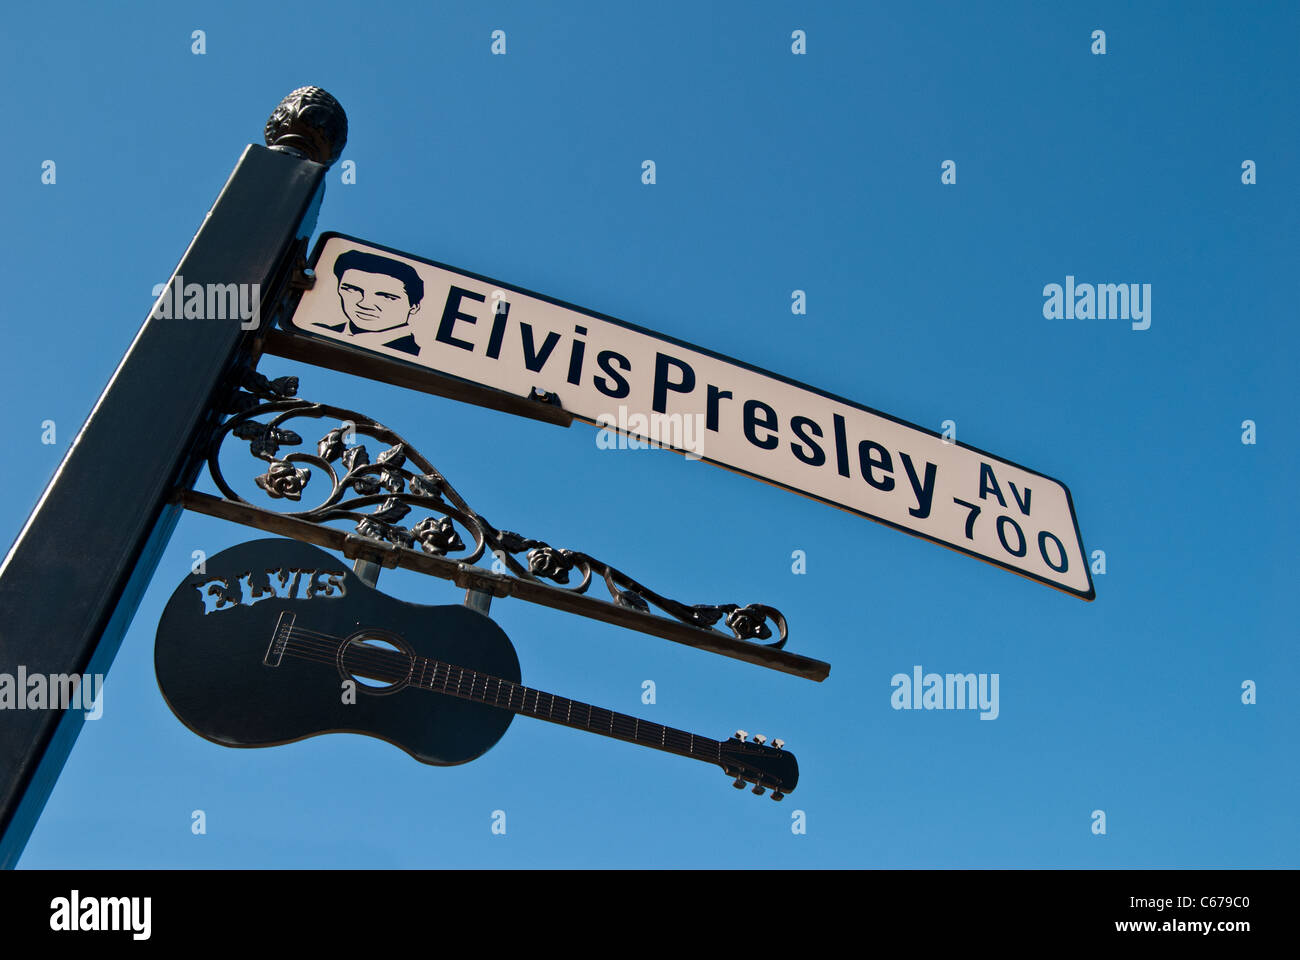 Elvis Presley Avenue traffic sign in Shreveport, Louisiana, USA Stock Photo